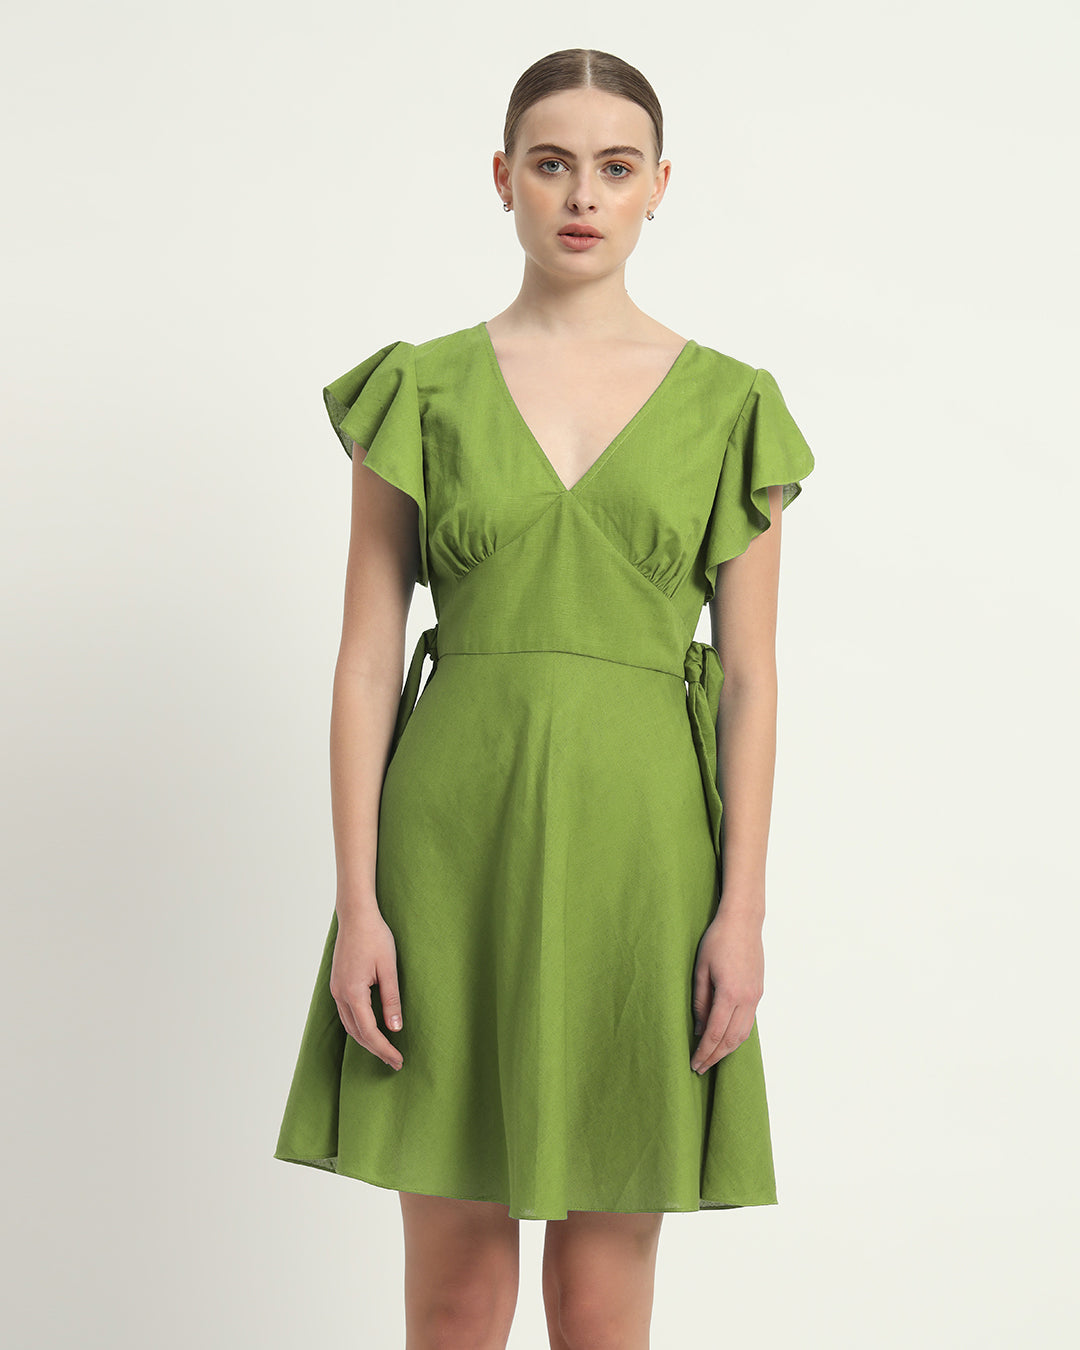 The Fern Fairlie Cotton Dress